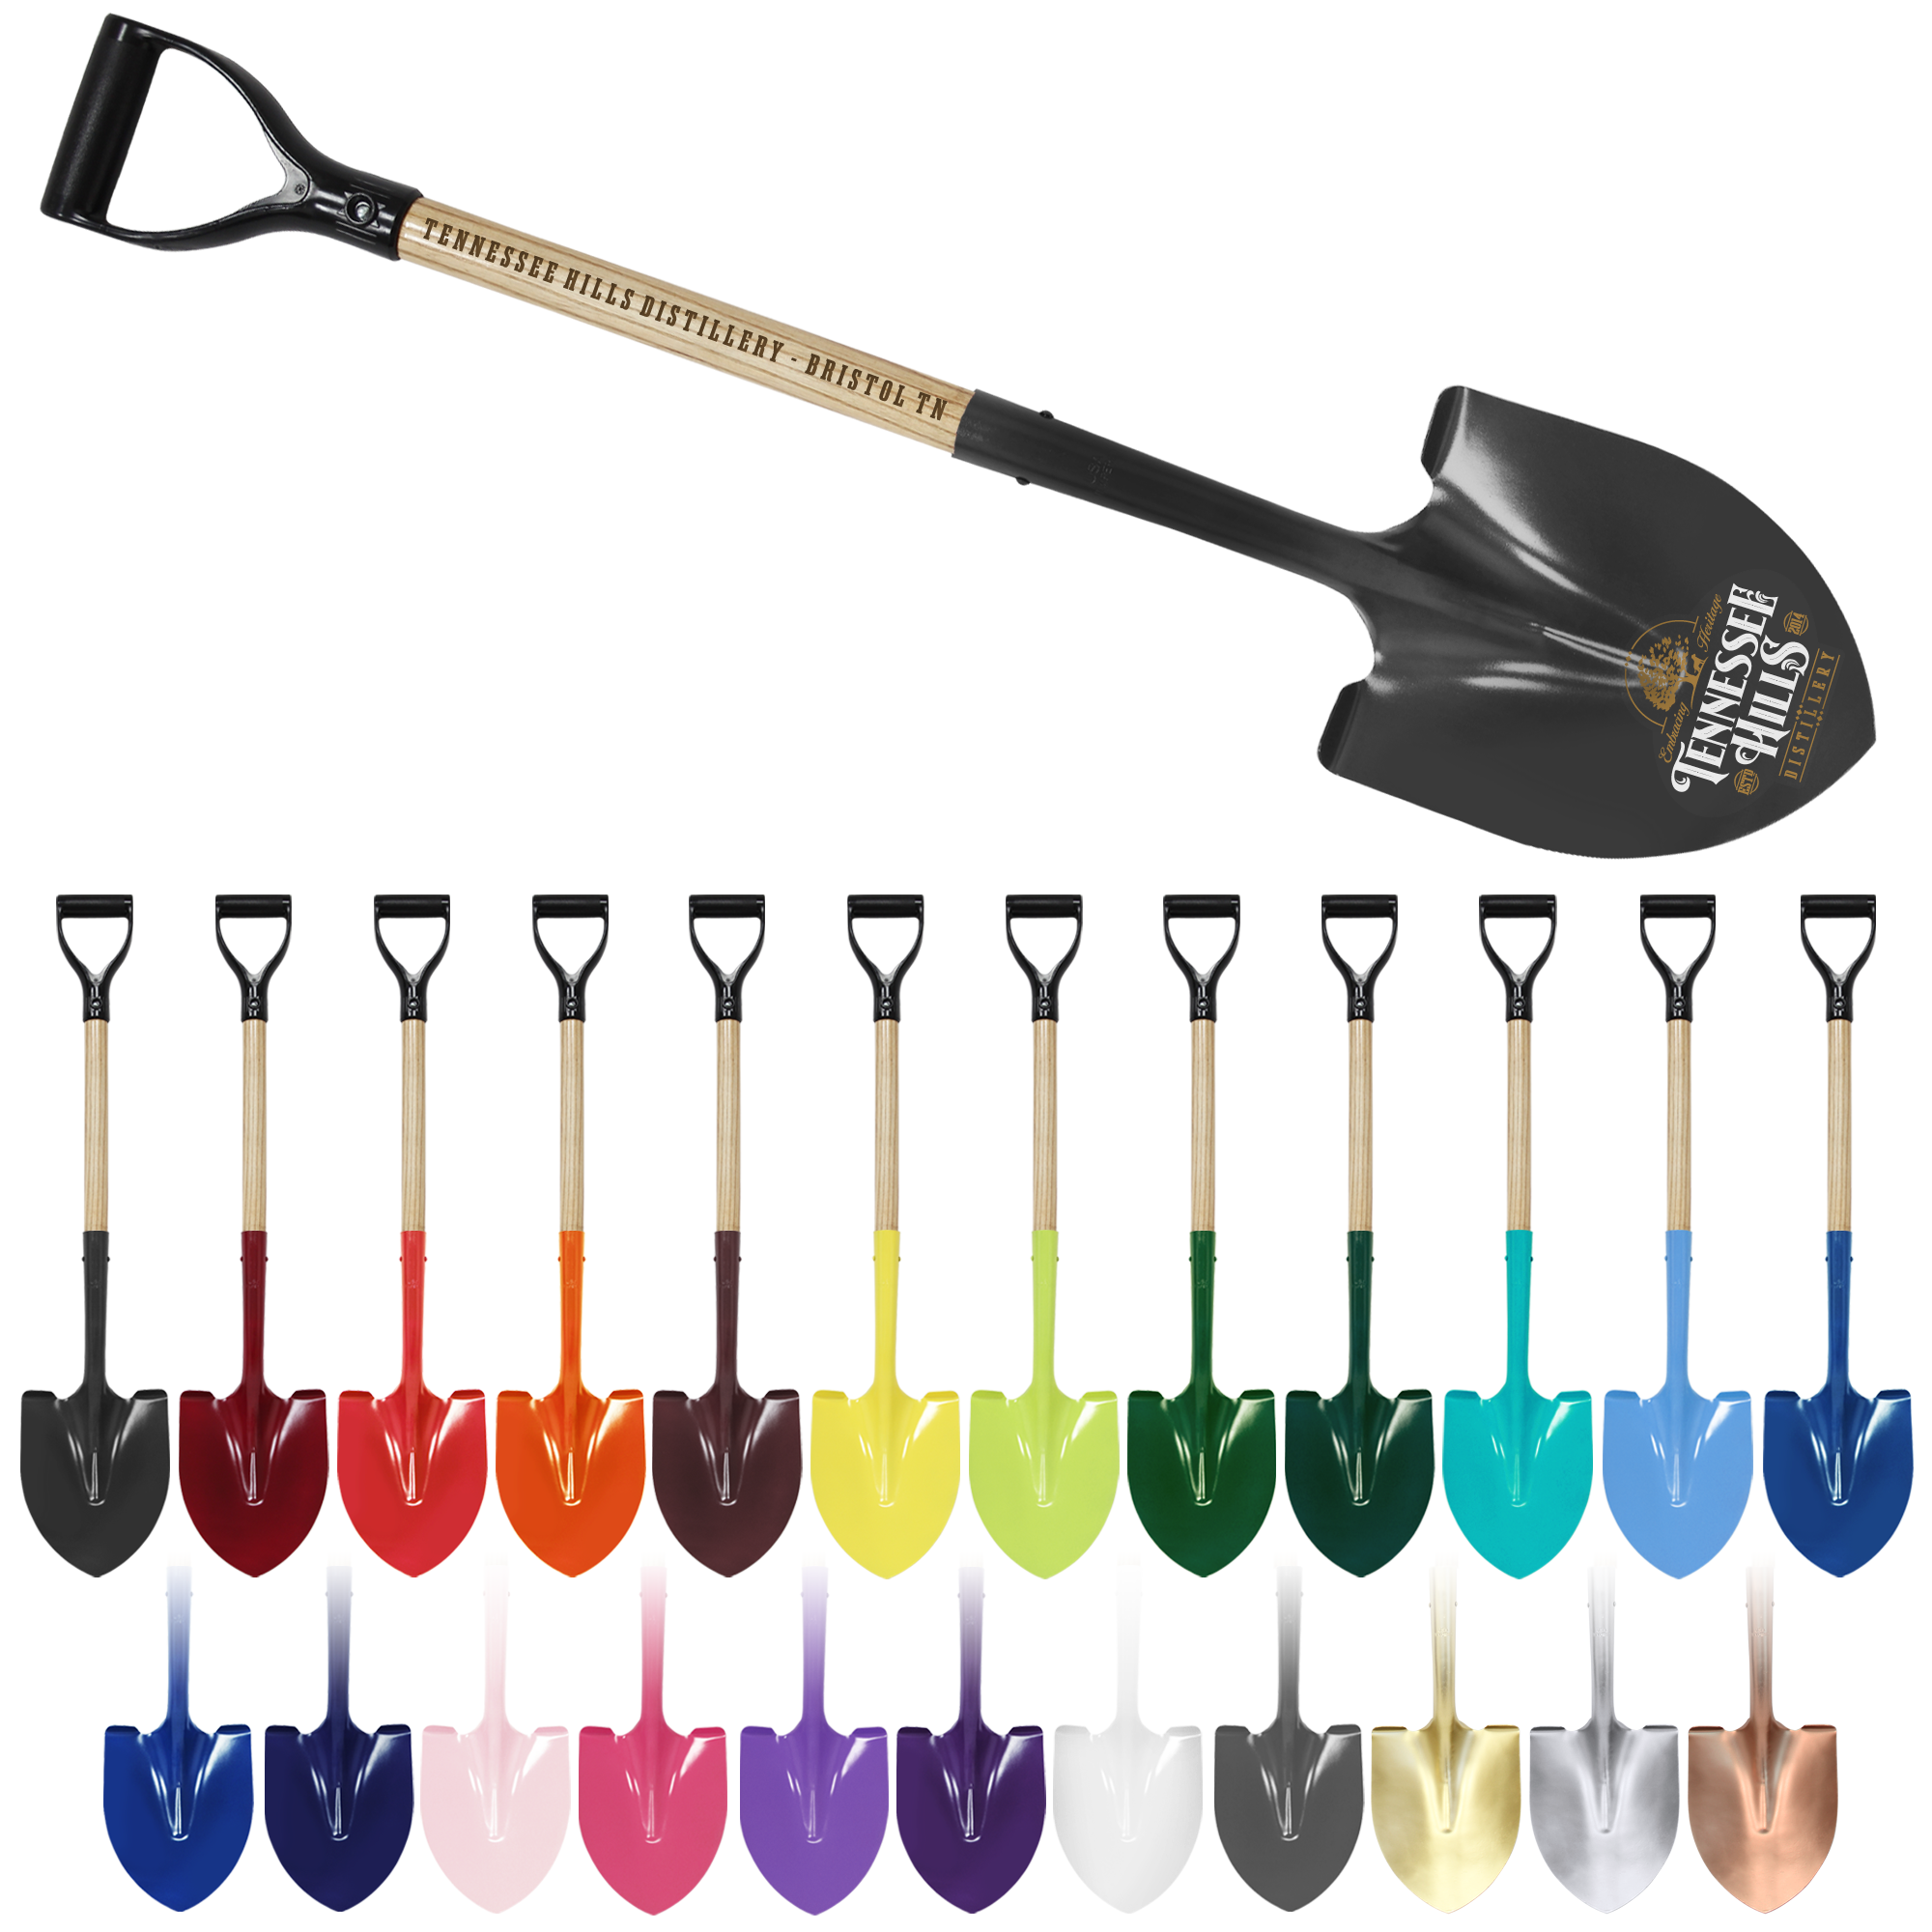 Custom Painted Groundbreaking Shovels